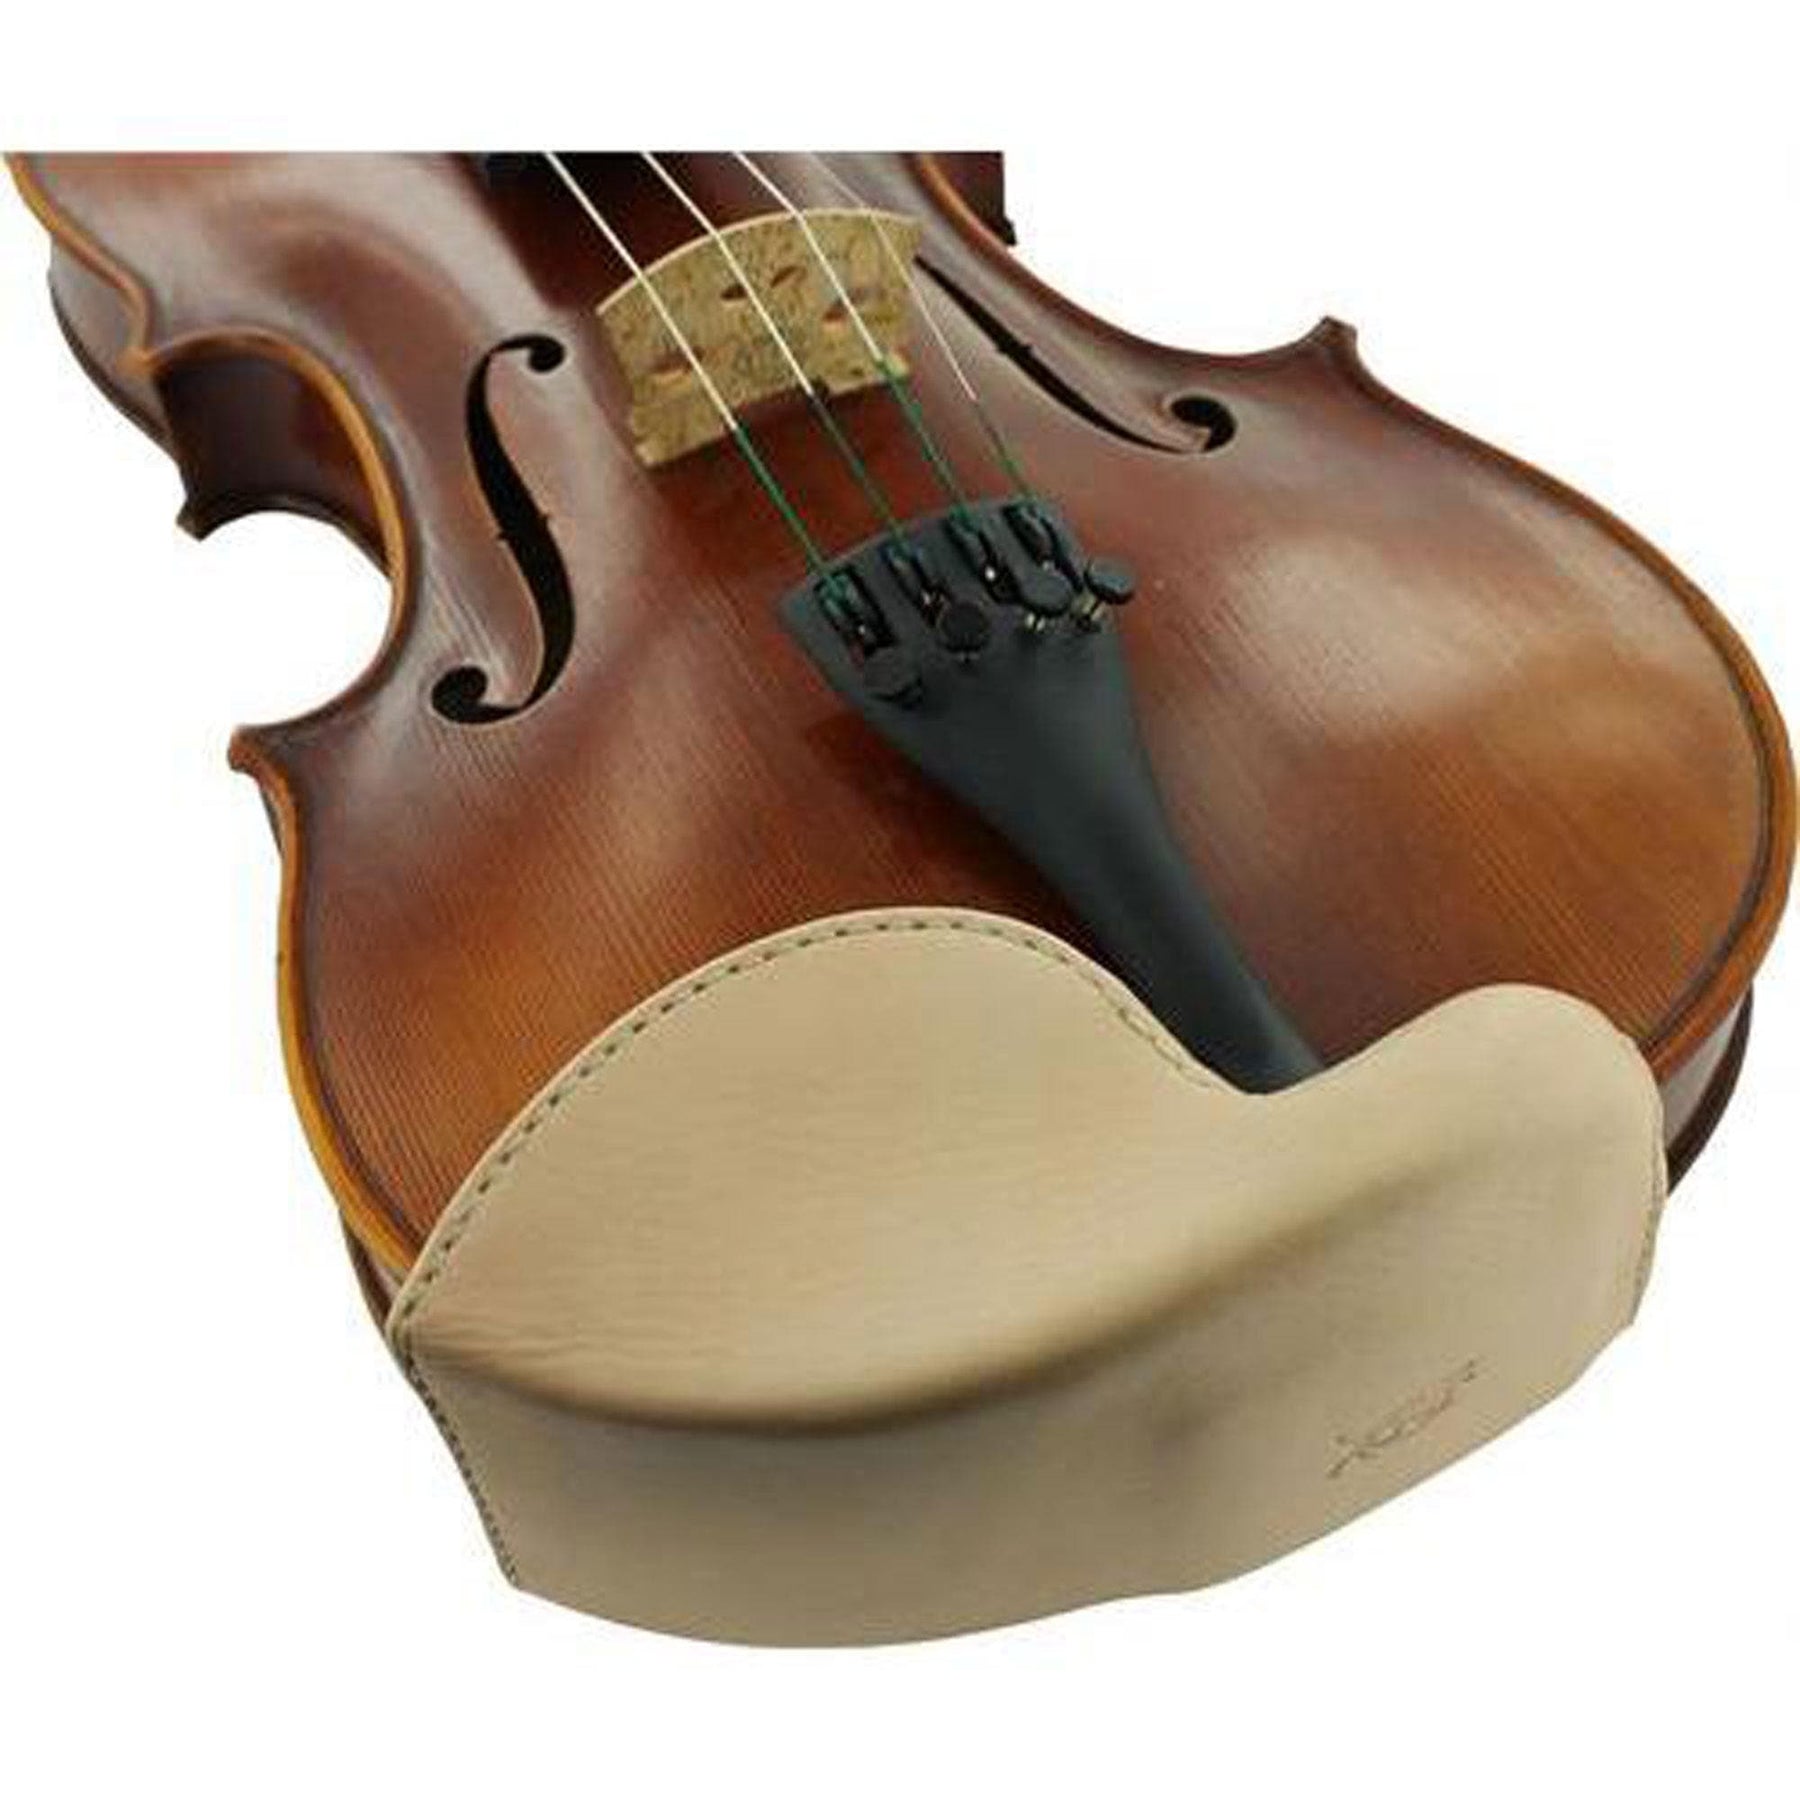 STRADPET Violin Neckguard Kit 4/4 Violin Natural